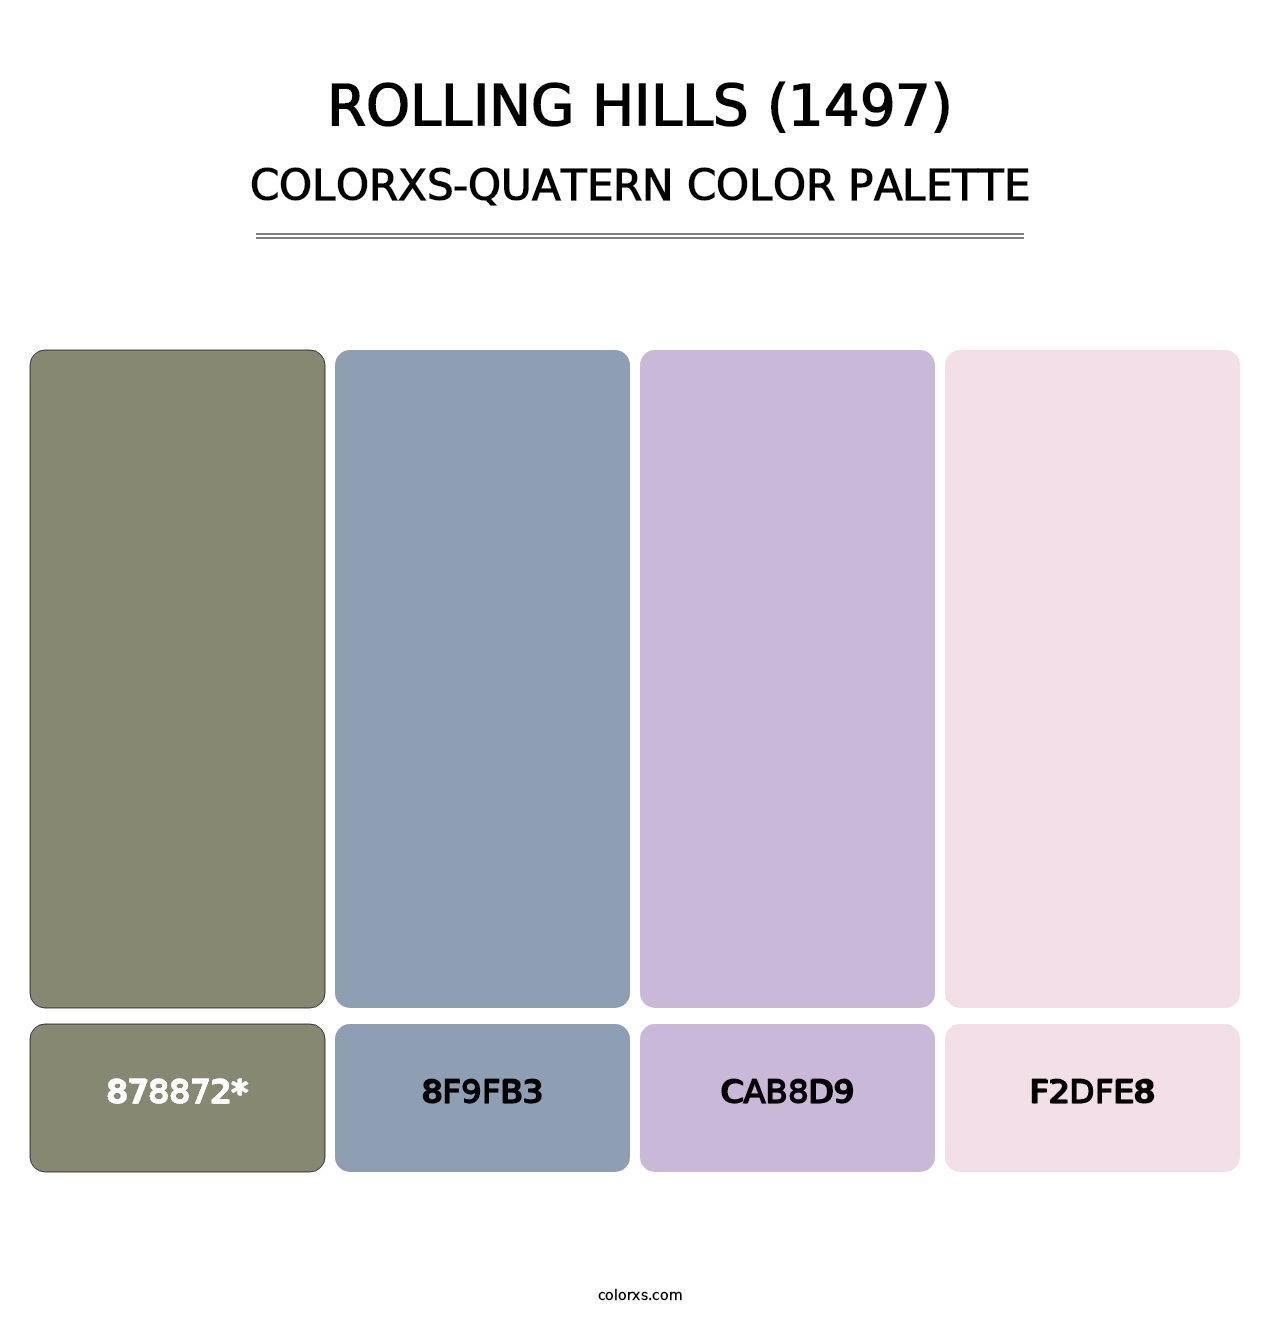 Rolling Hills (1497) - Colorxs Quatern Palette